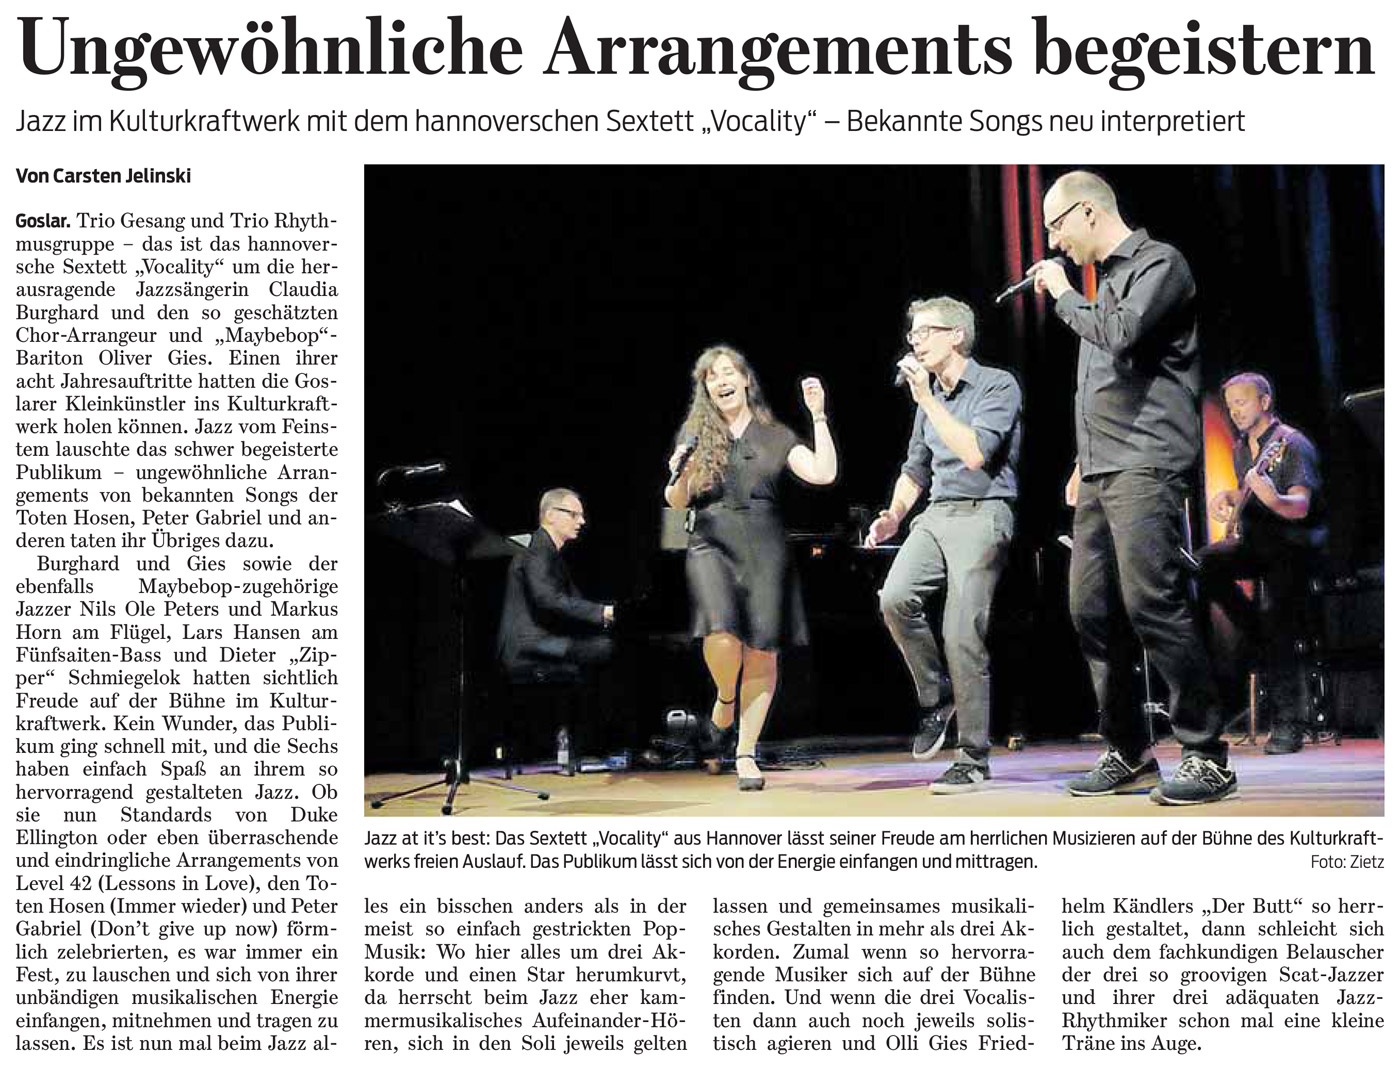 © Copyright: Goslarsche Zeitung, 15.08.2018, www.goslarsche.de